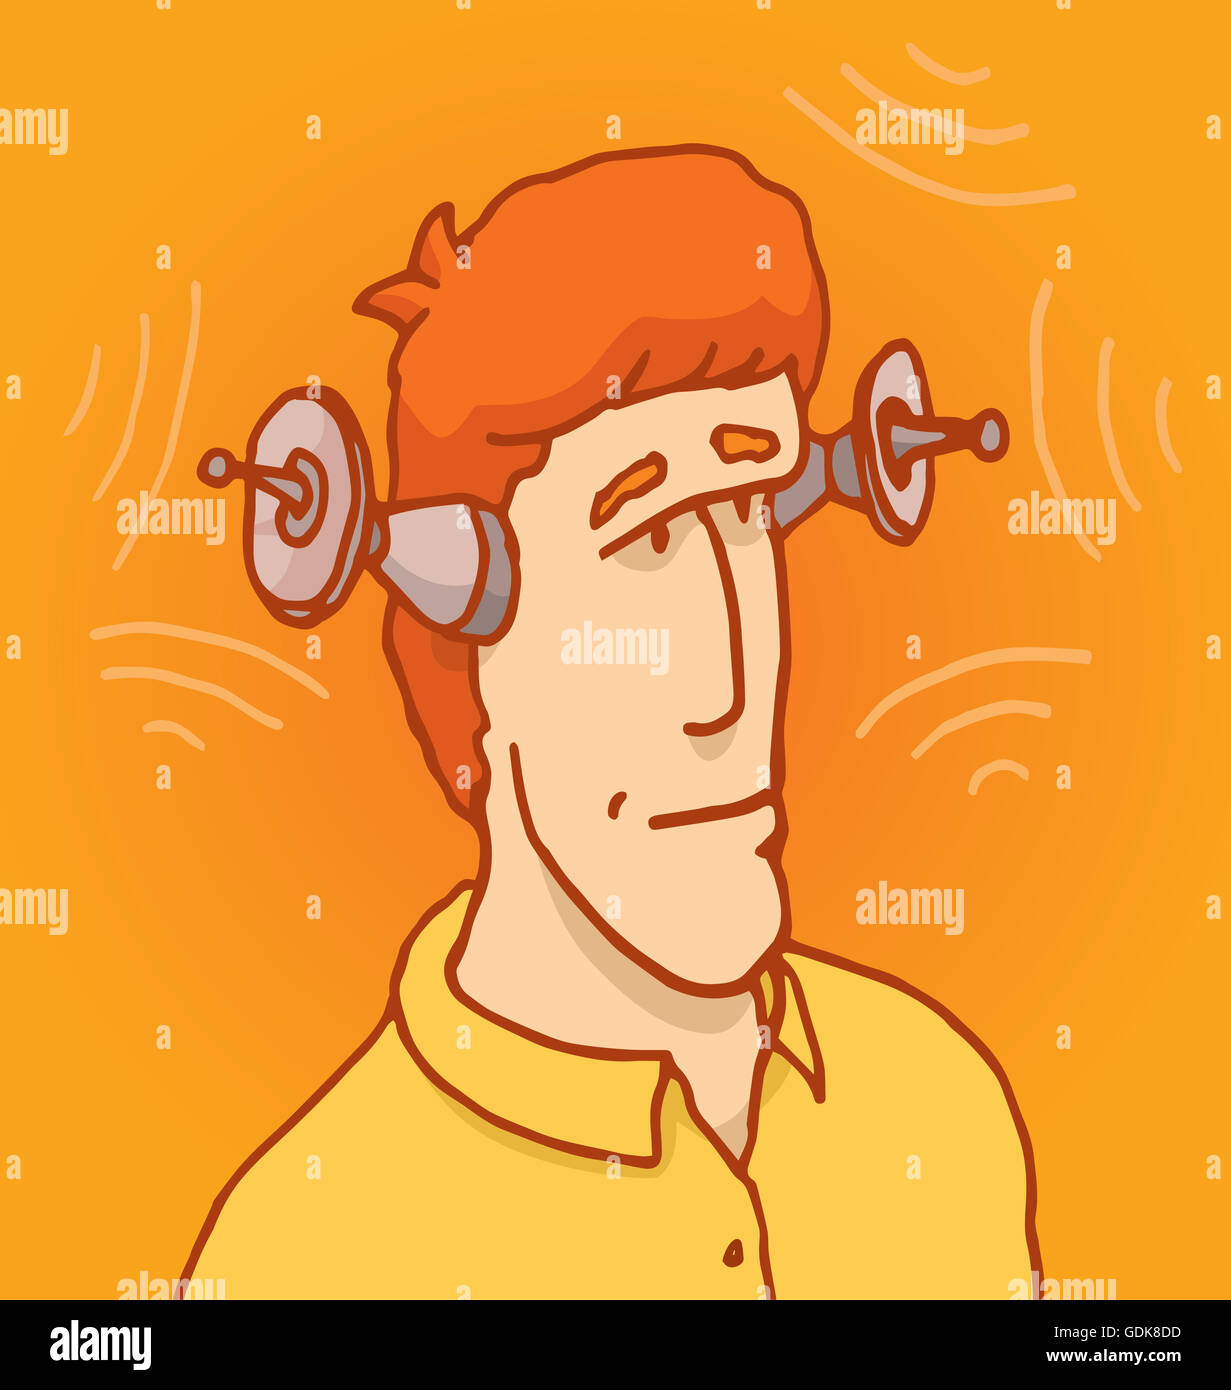 Cartoon illustration of a man with enhanced robotic ears or antenna Stock Photo